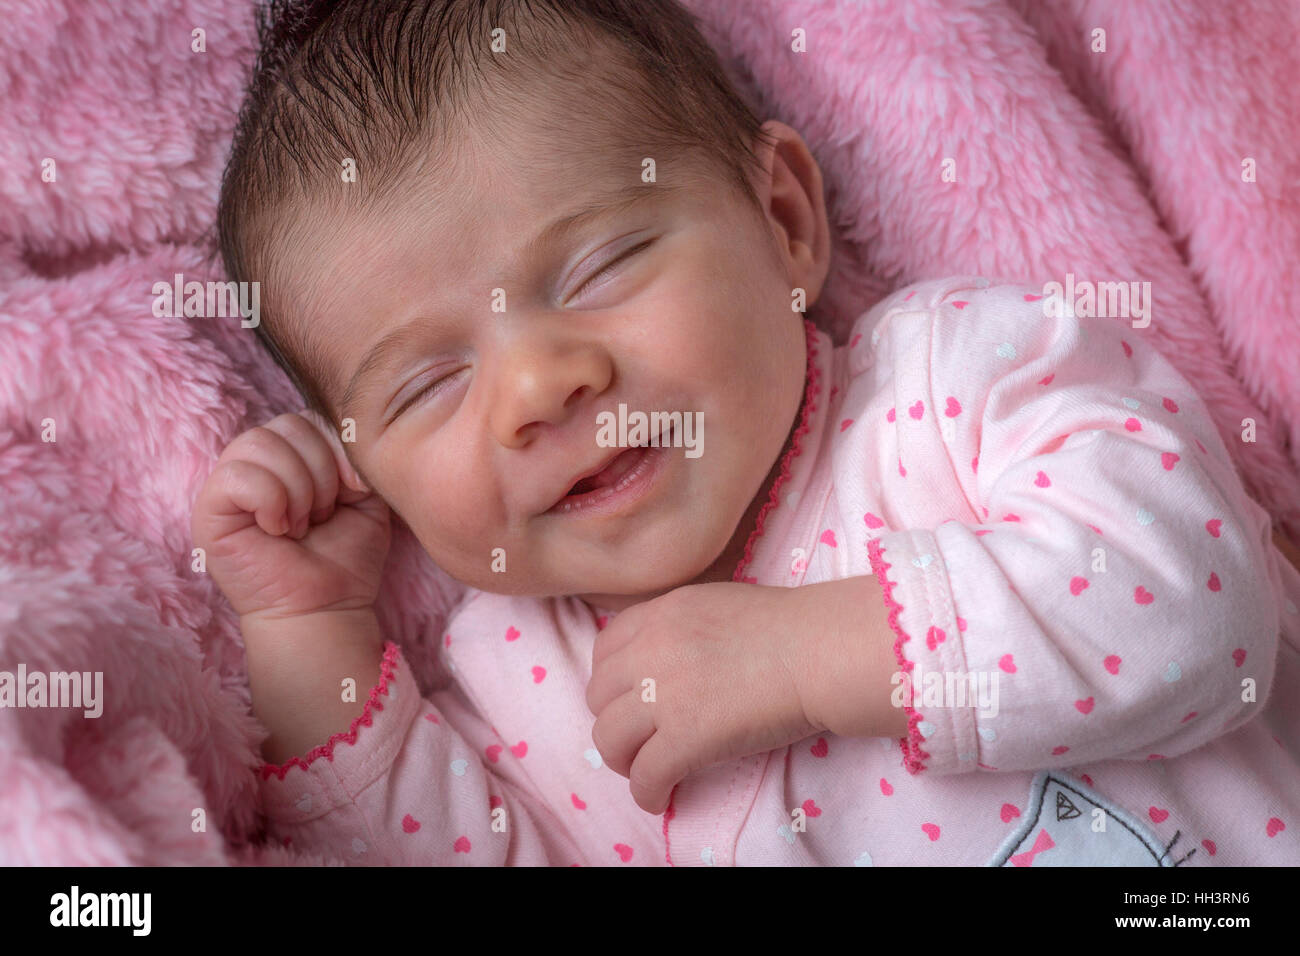 Weniger als drei Wochen Alter lächelndes Baby girl, liegend auf einer rosa Decke. Nouveau-Né de Moins de Trois Semaines Souriant. Stockfoto